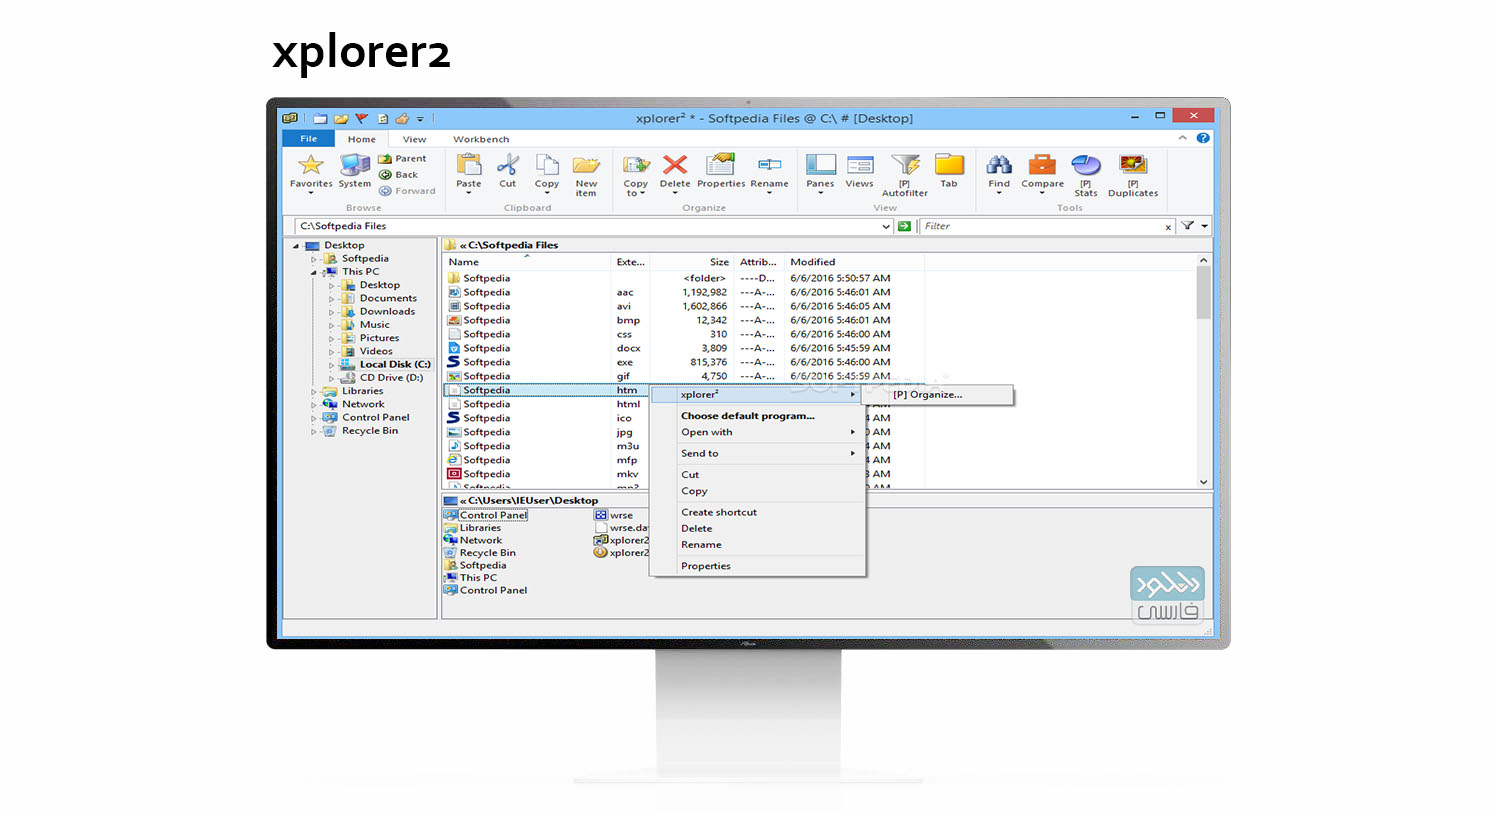 Xplorer2 Ultimate 5.4.0.2 instal the last version for ios